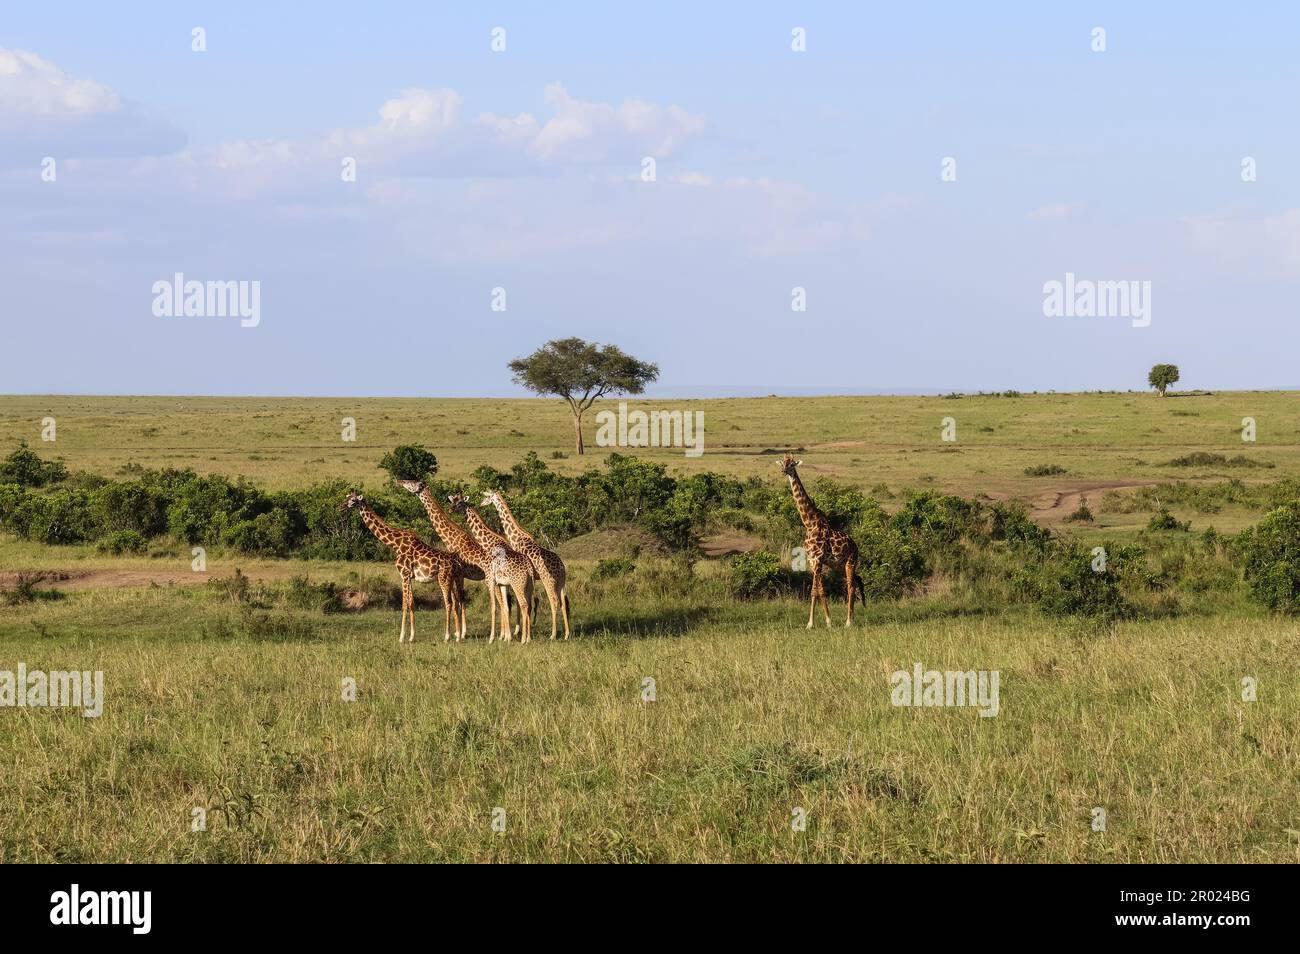 Beautiful giraffe in the wild nature of Africa Stock Photo